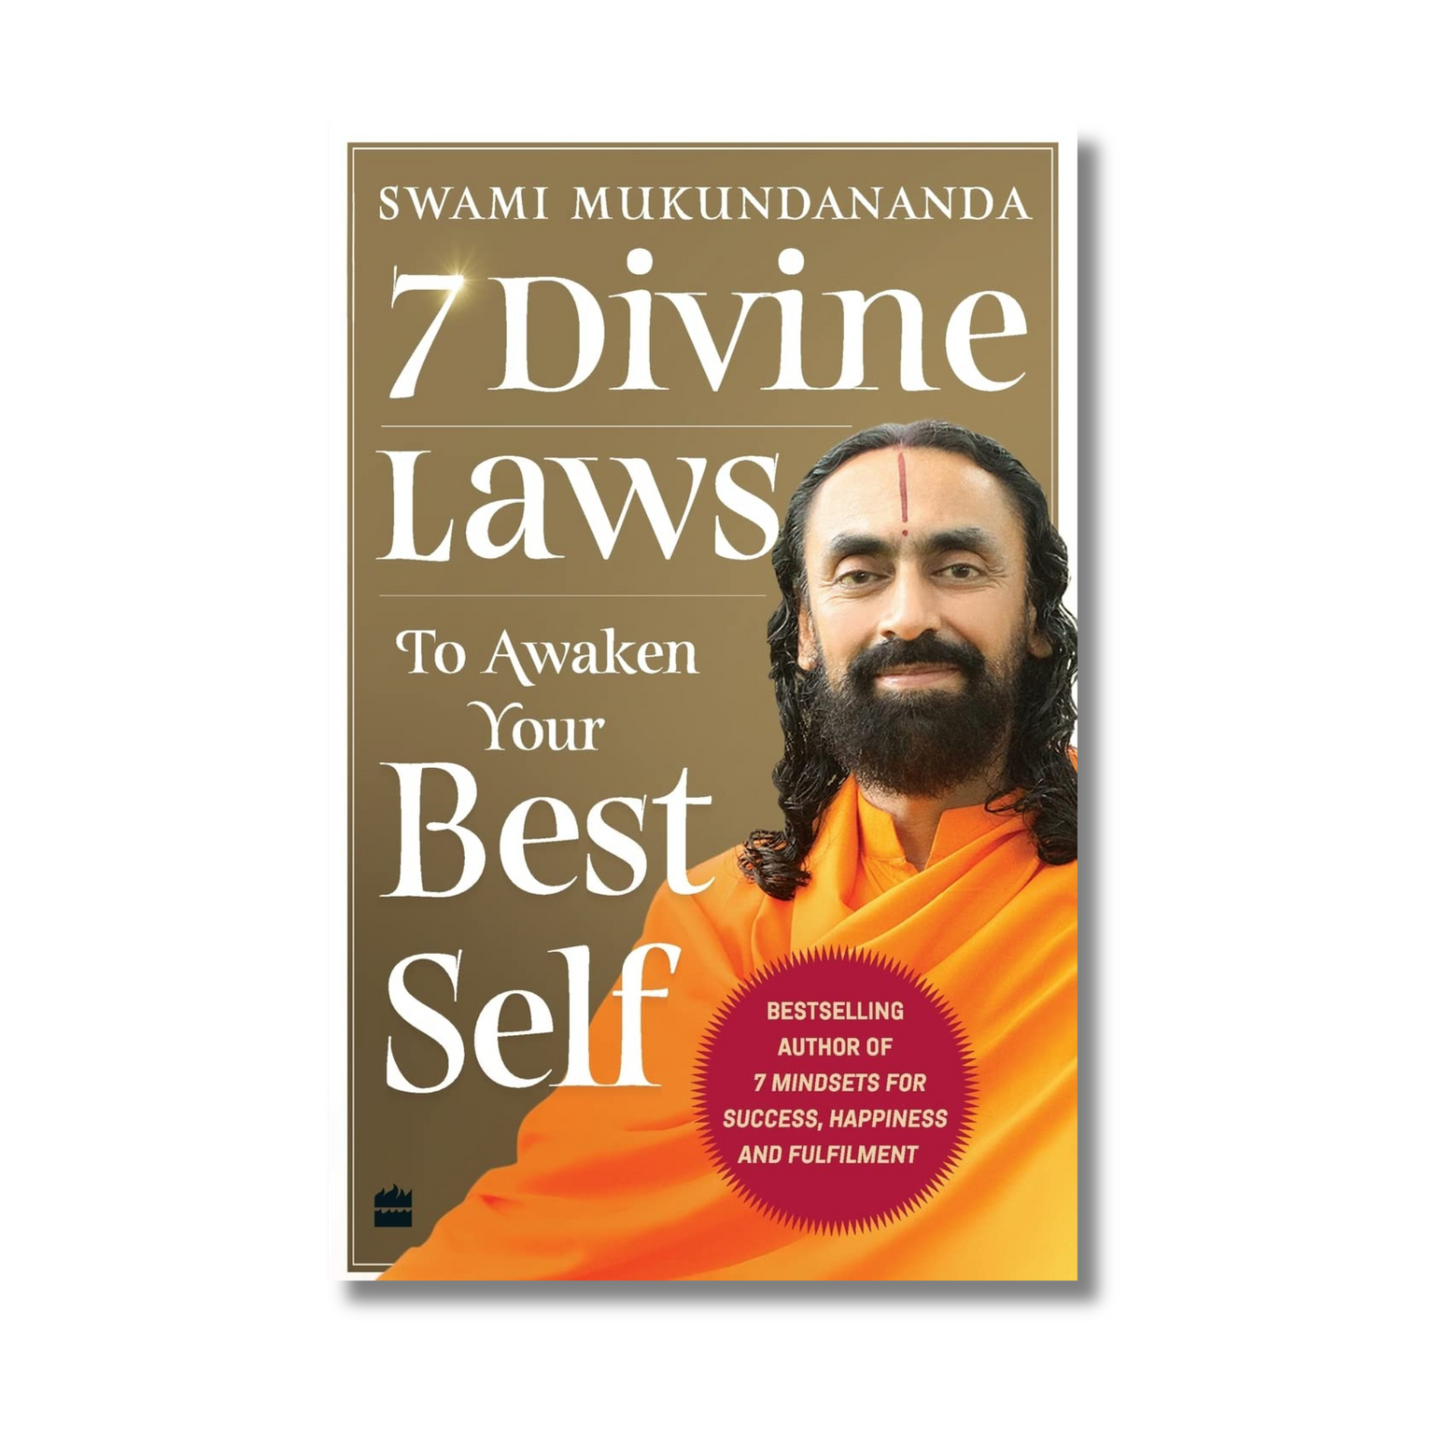 7 Divine Laws to Awaken Your Best Self by Swami Mukundananda (Paperback)